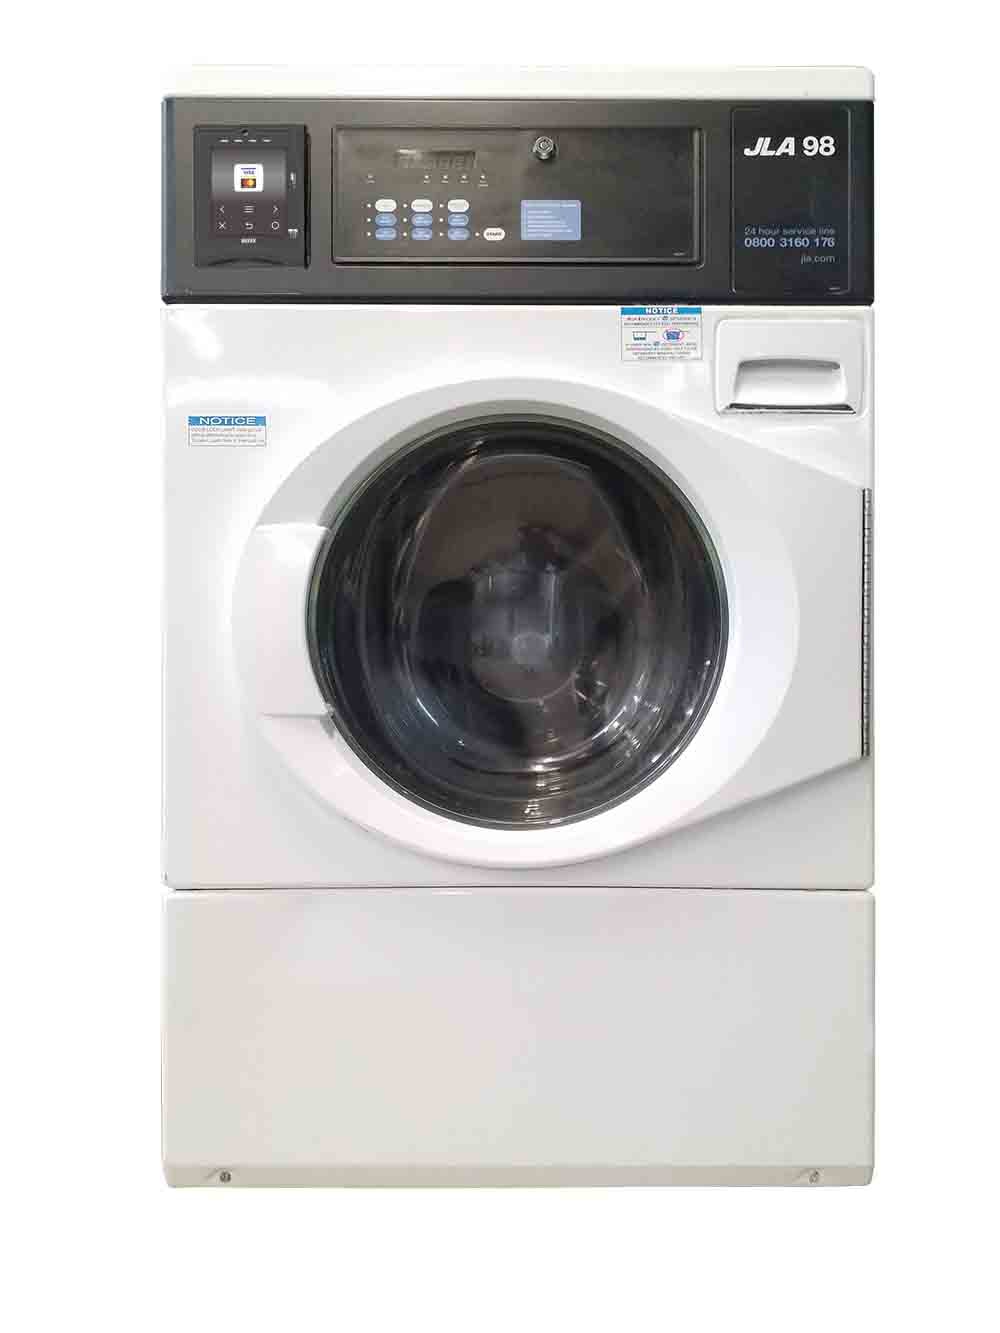 JLA 98 washing machine with Nayax